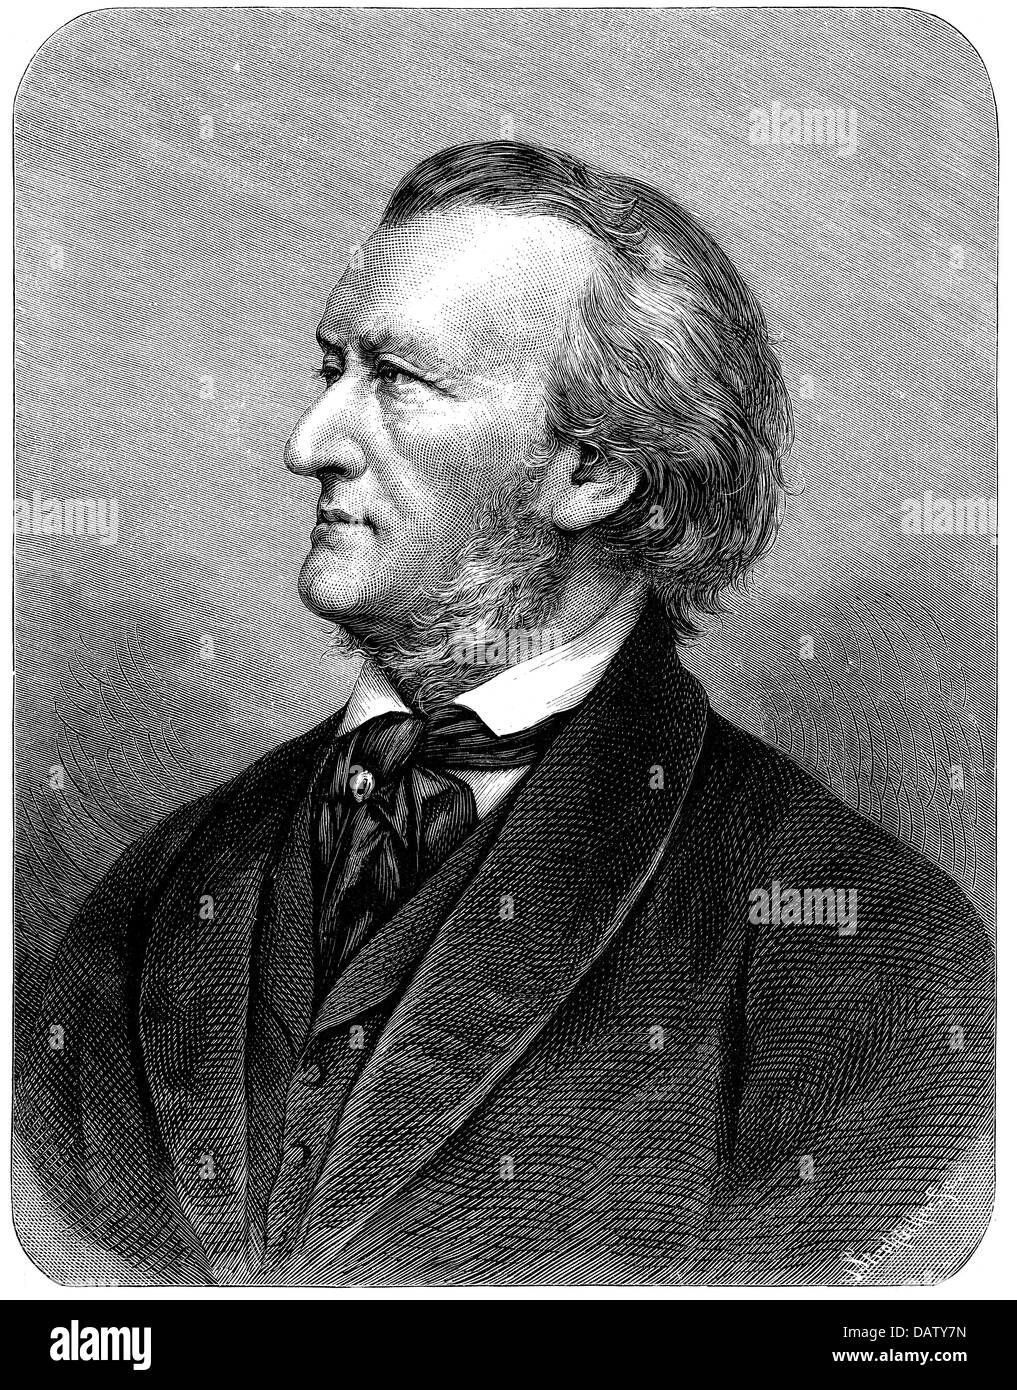 Wagner, Richard, 22.5.1813 - 13.2.1883, German composer, semiprofile, wood engraving, 19th century, Stock Photo